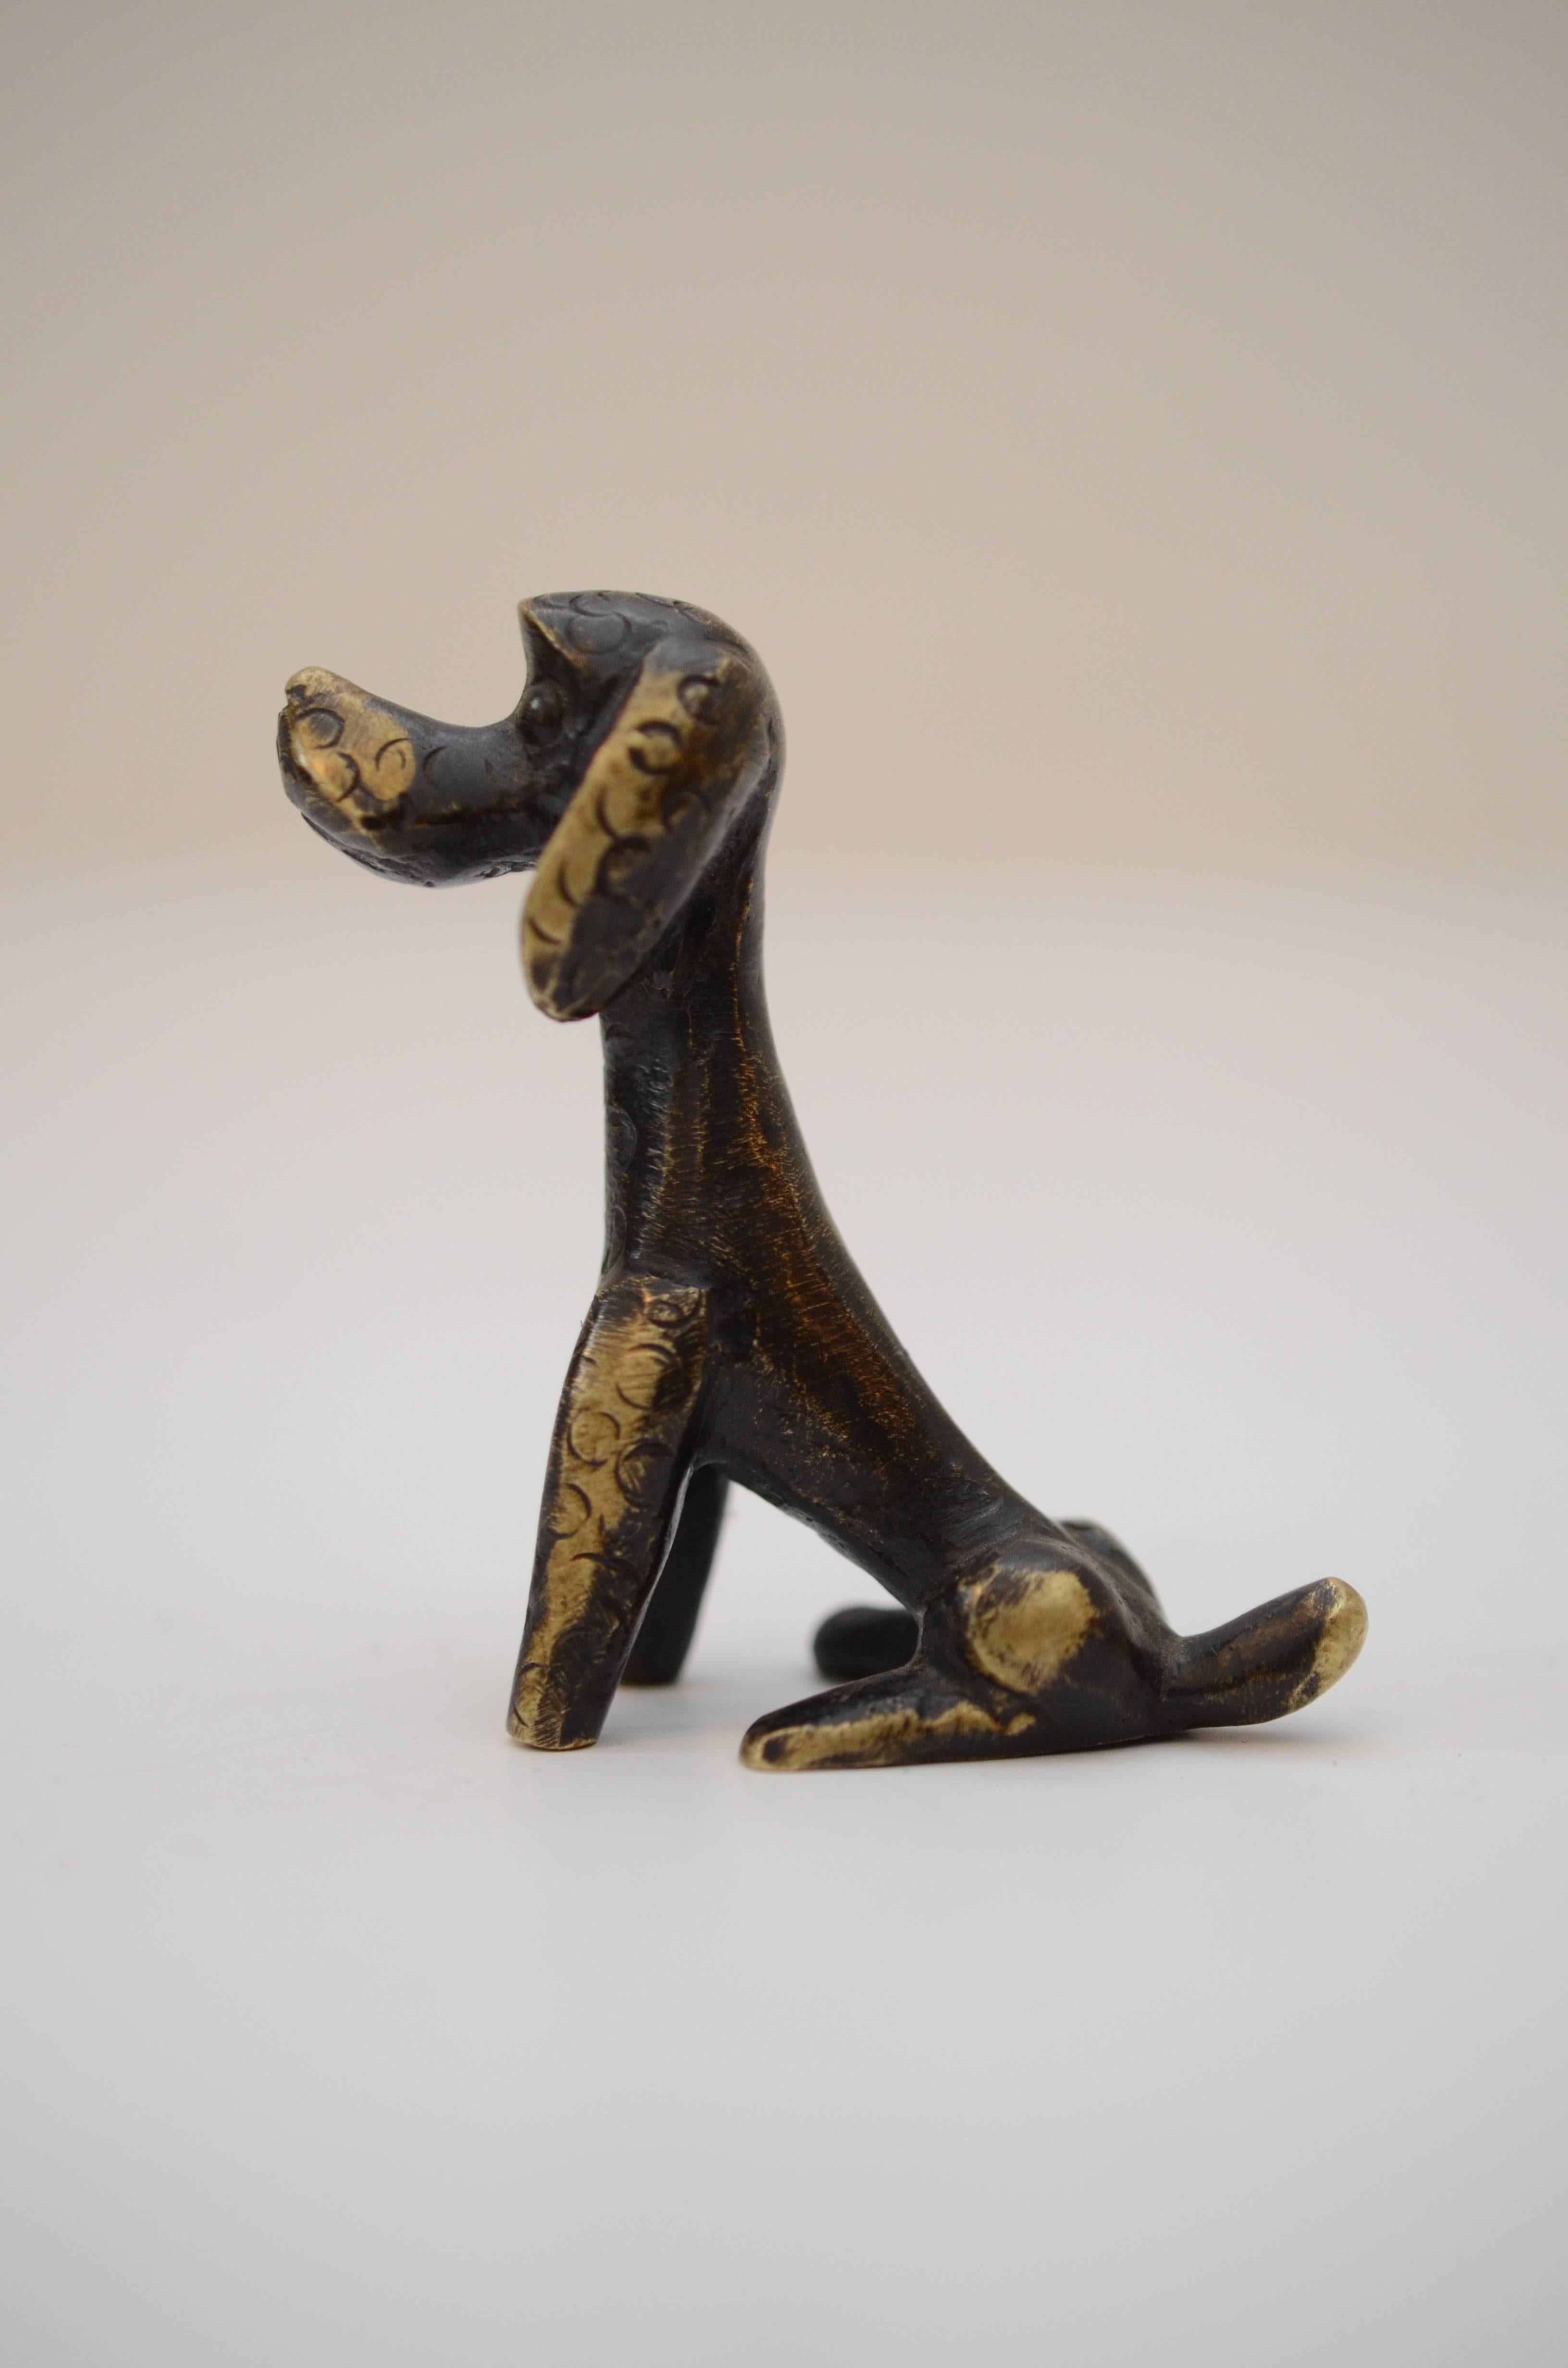 Walter Bosse poodle figurine
Original condition.